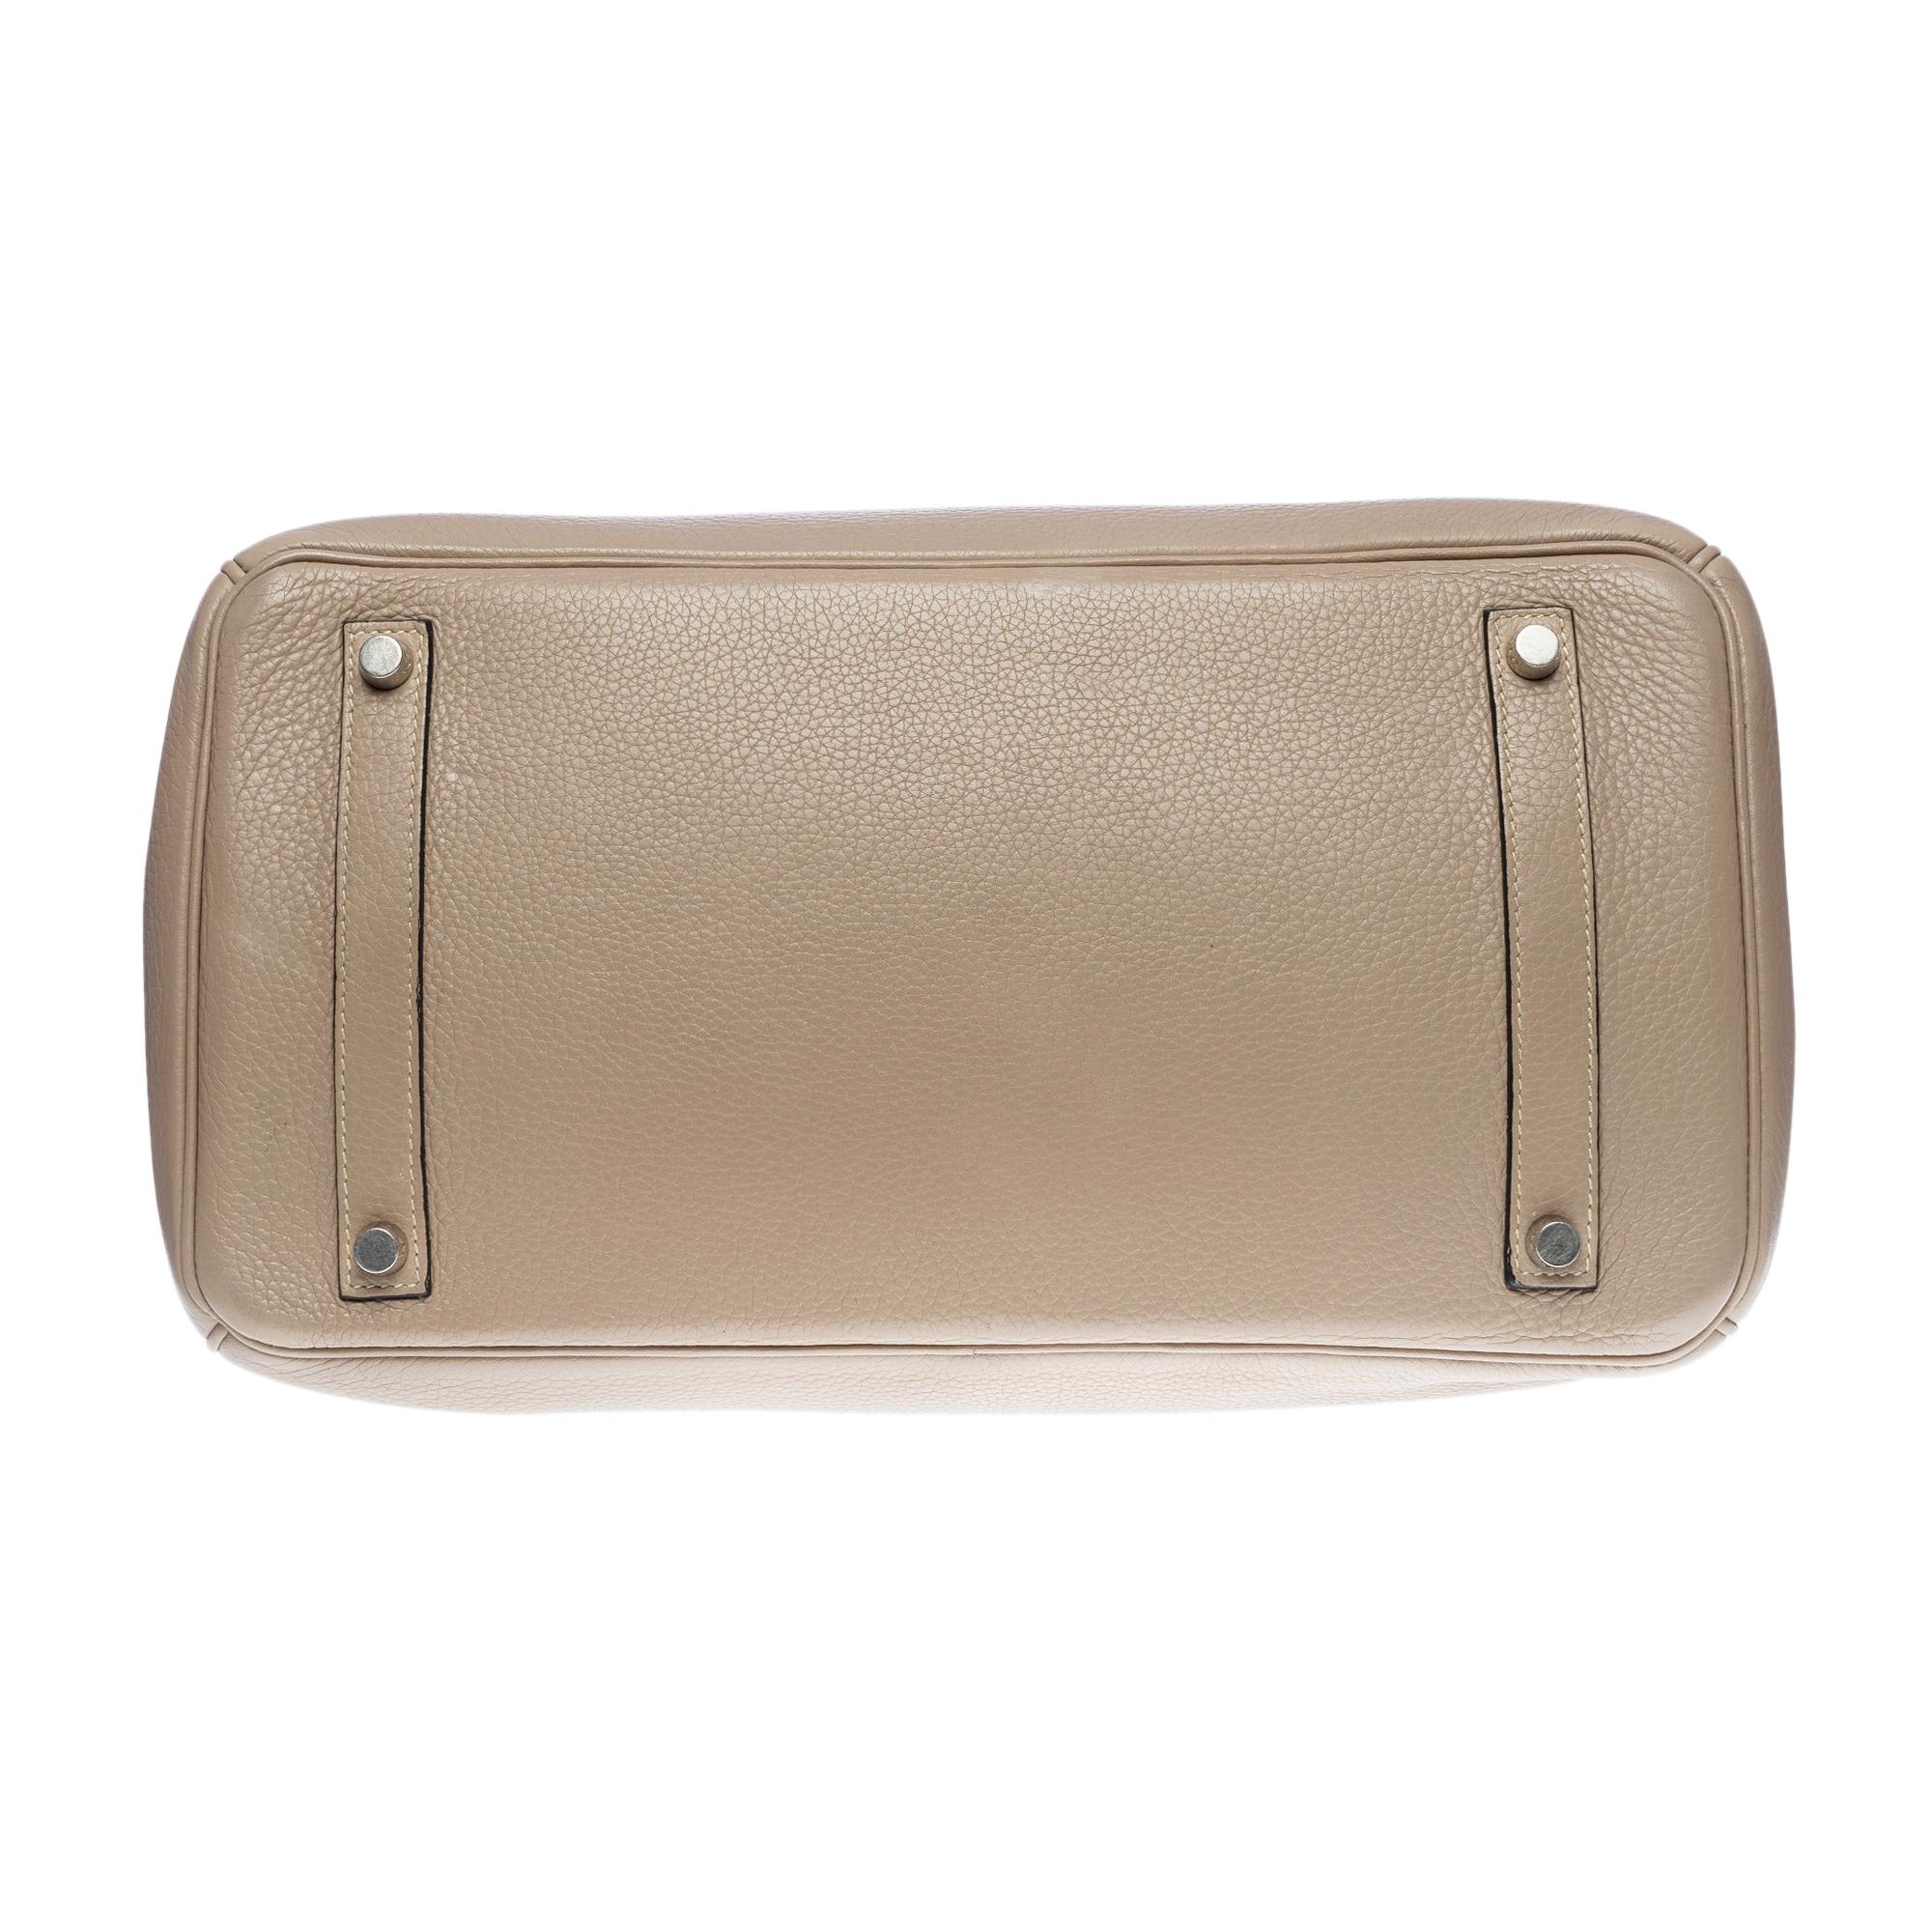 Superb Hermes Birkin 35 cm handbag in dove gray Togo leather, SHW 3